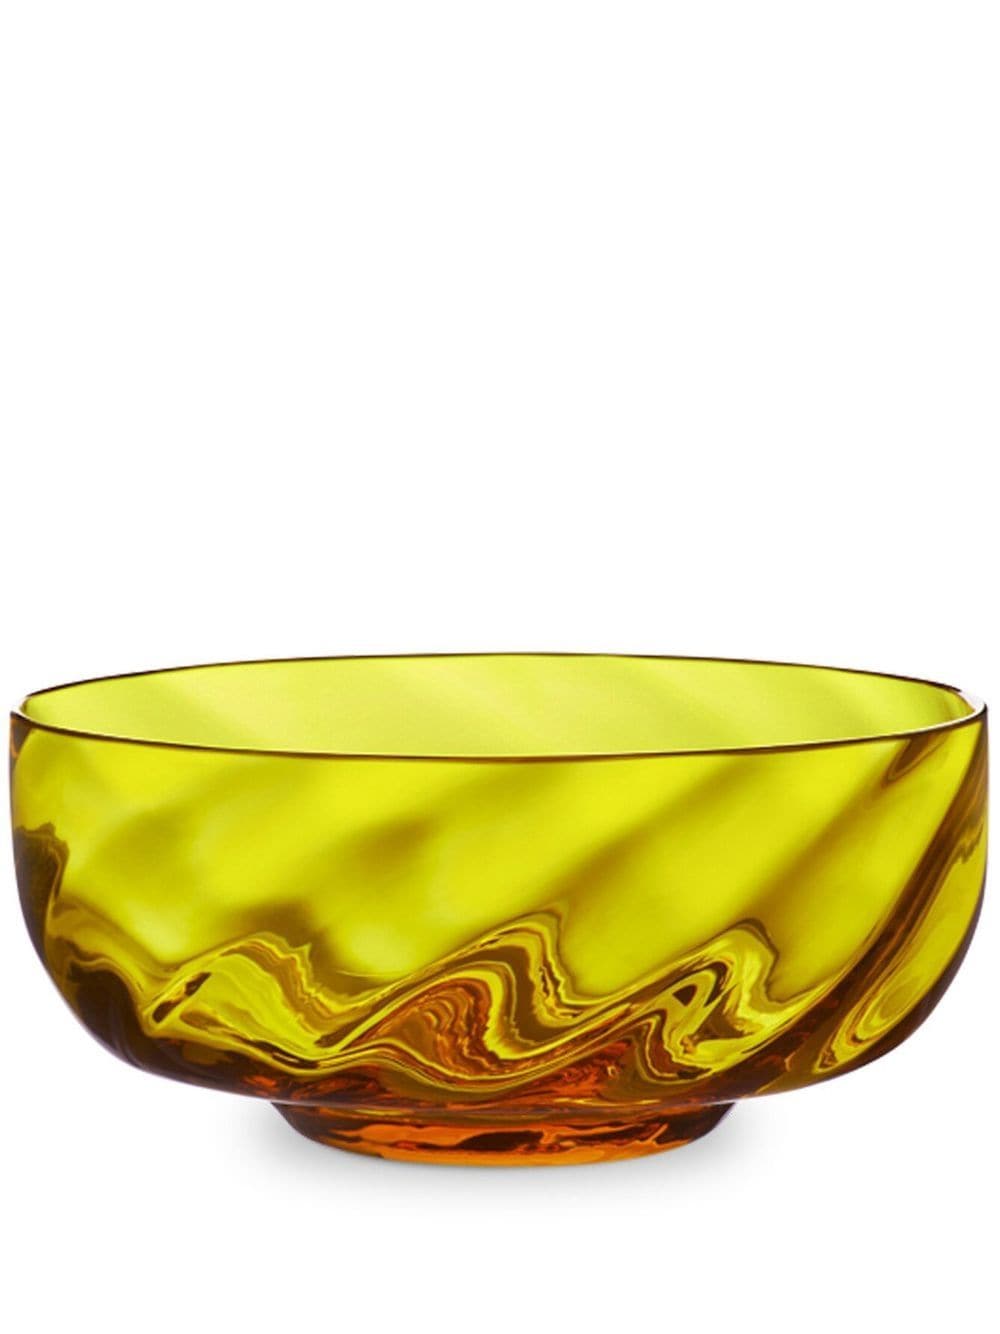 Dolce & Gabbana Murano glass ice-cream bowls (set of 2) - Yellow von Dolce & Gabbana